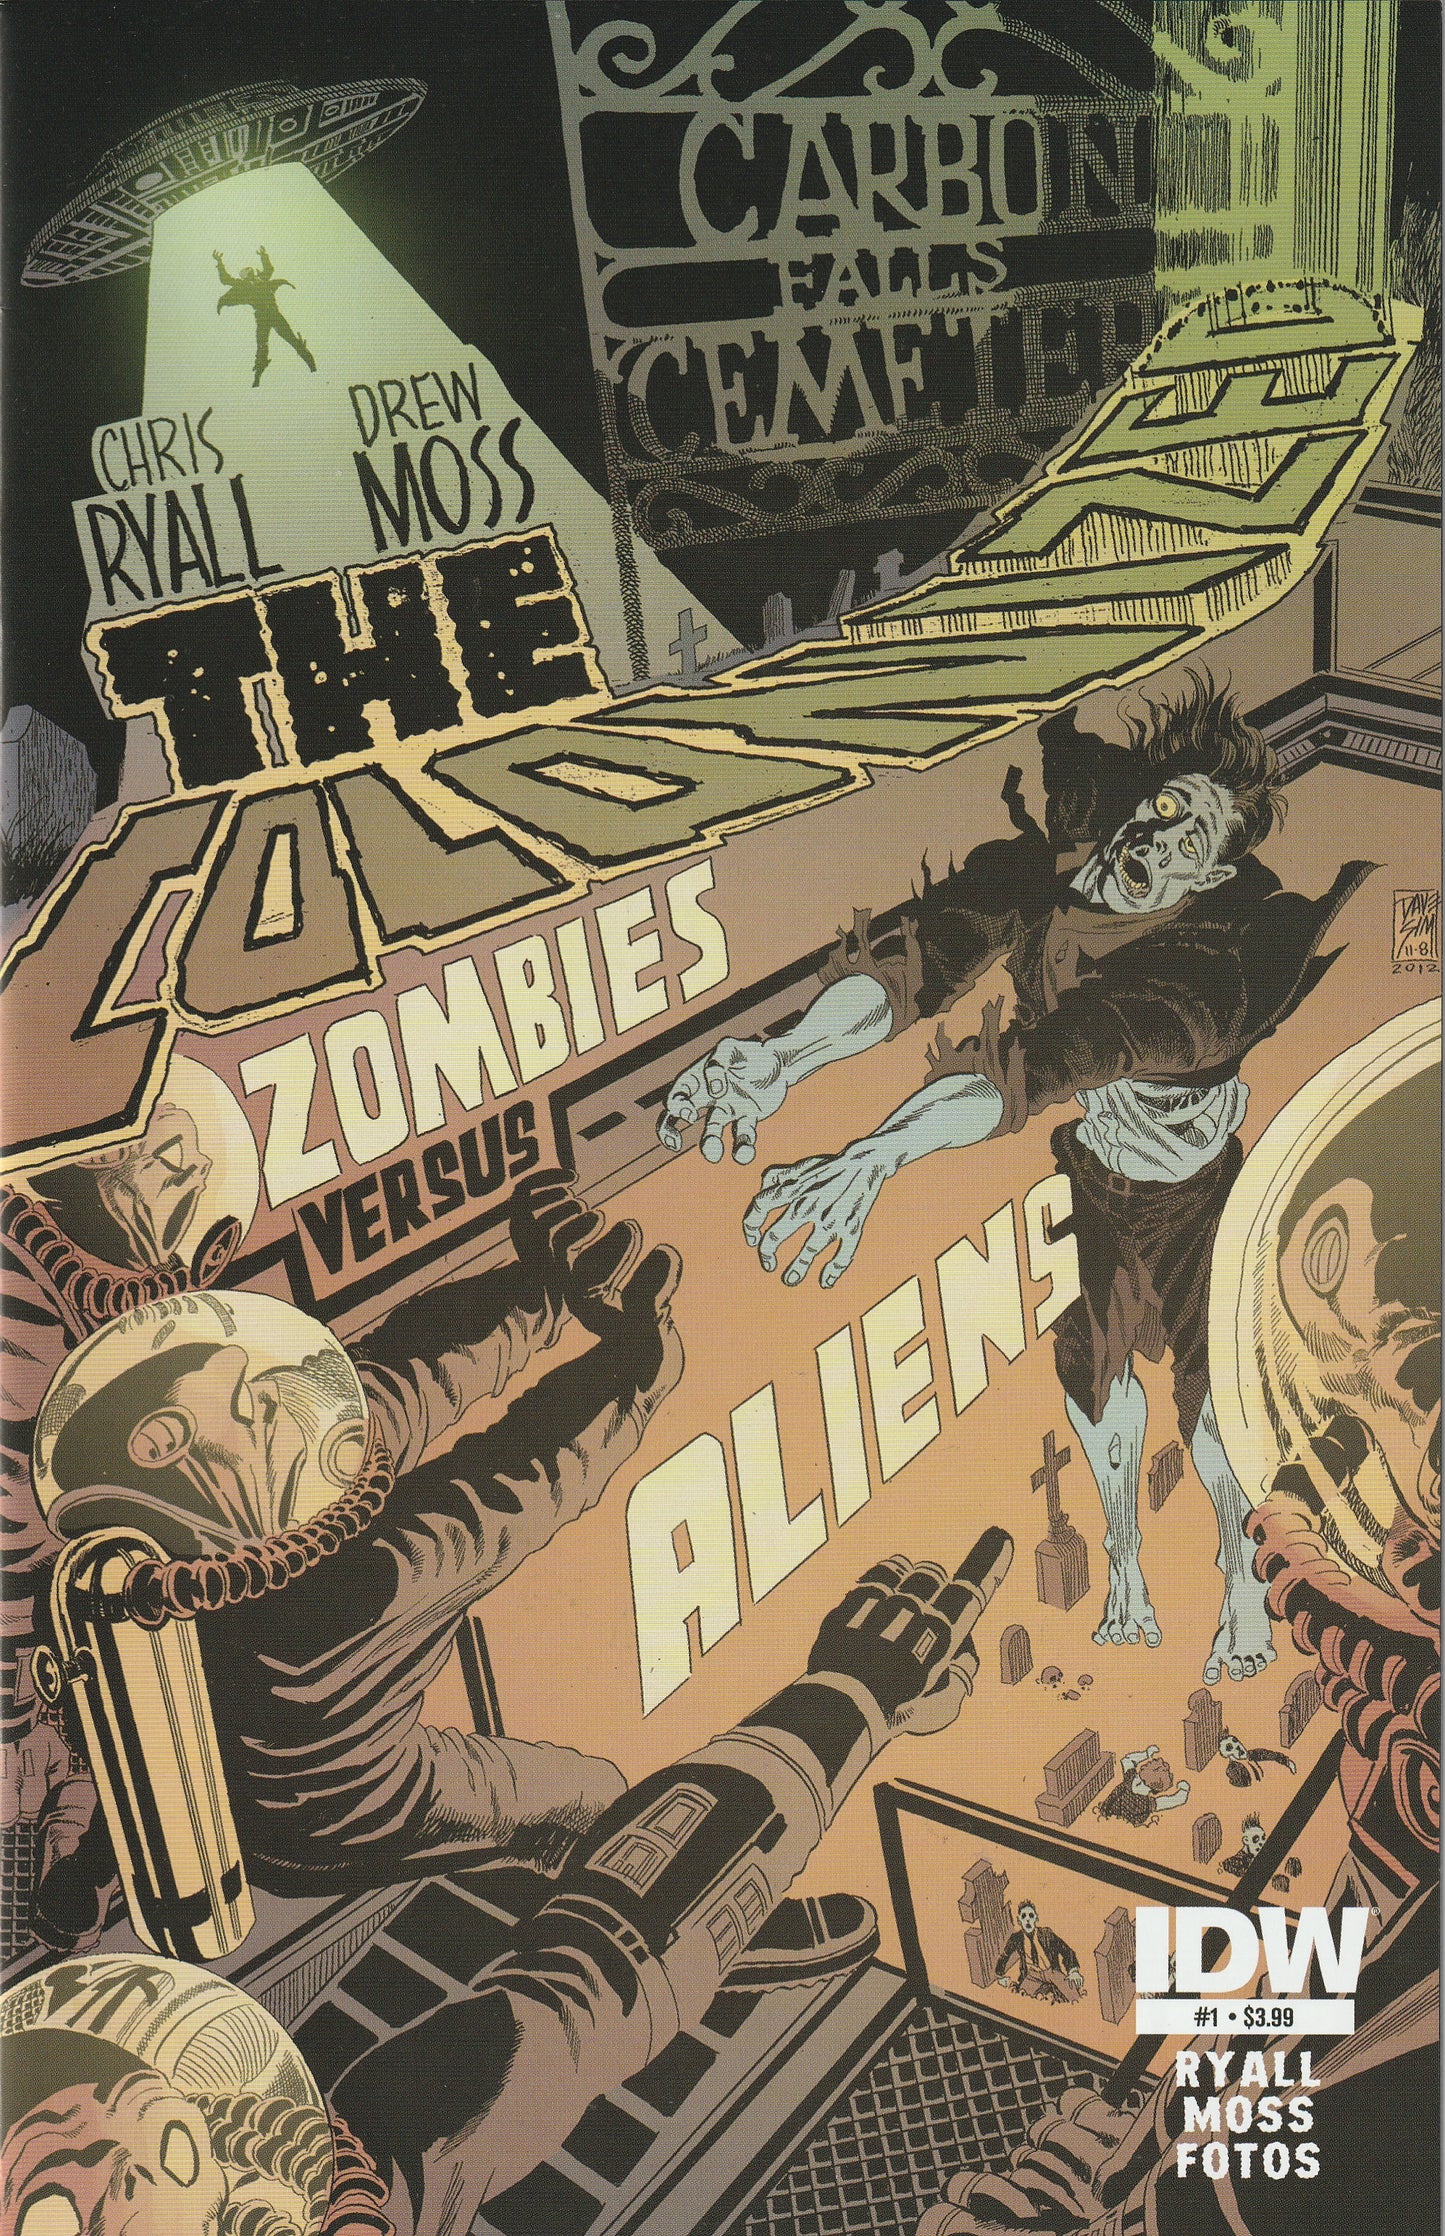 The Colonized (2013) - 4 issue mini series